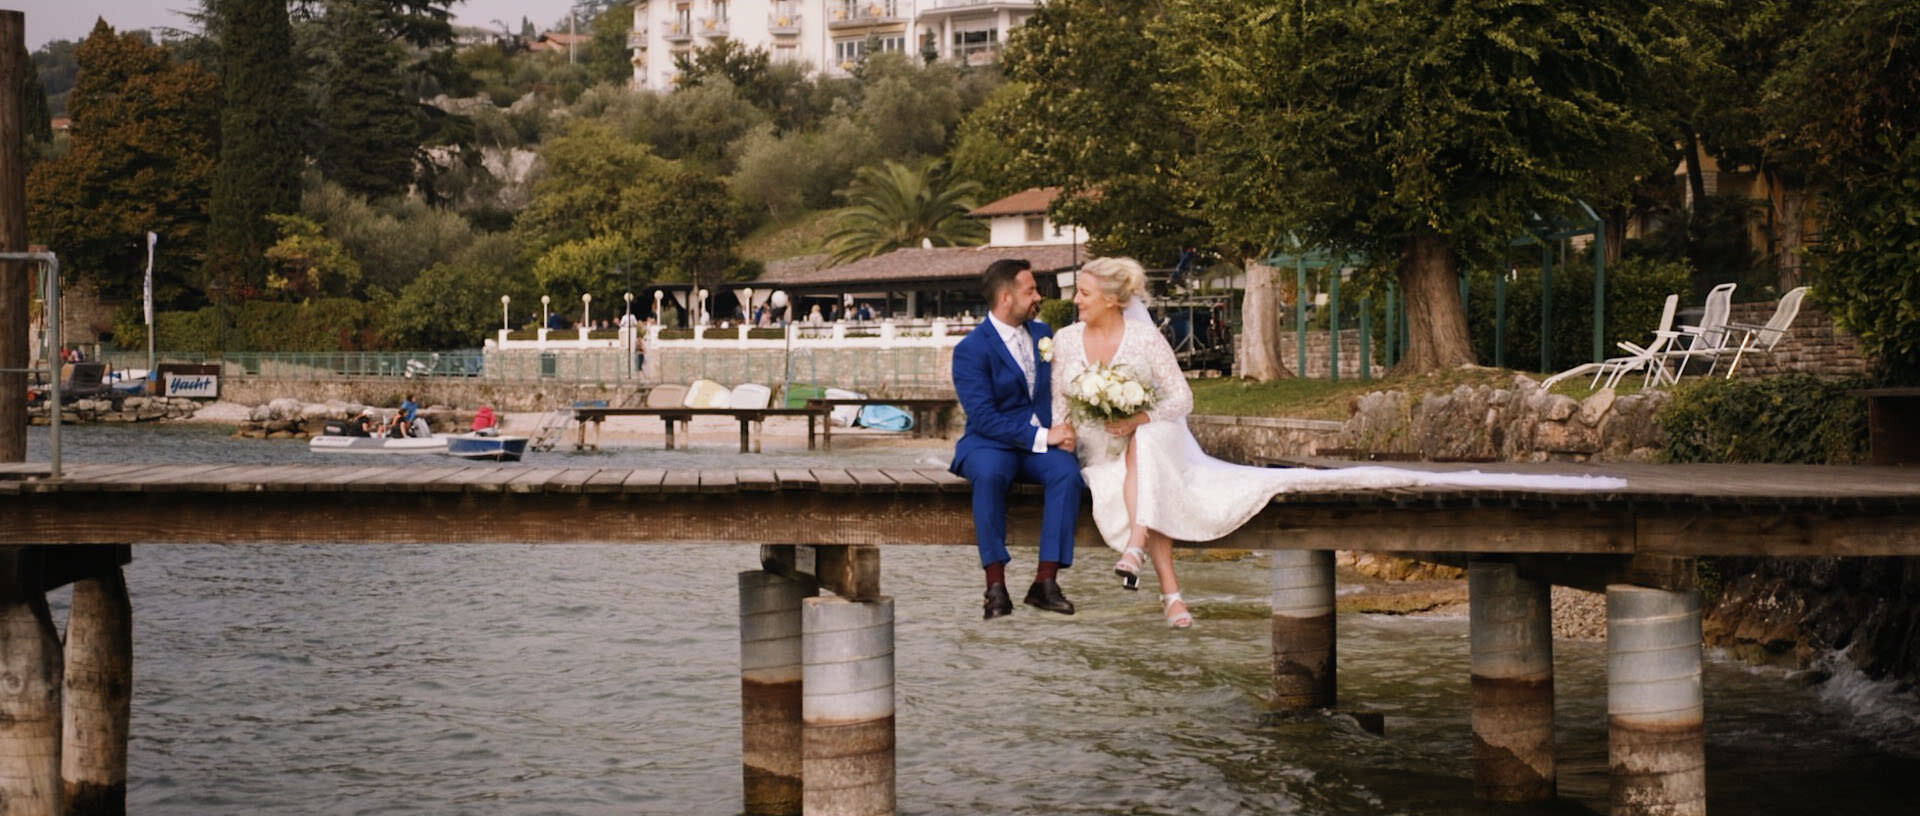 Leanne & Ricky Desitnation Wedding in Malcesine Lake Garda 36.jpg